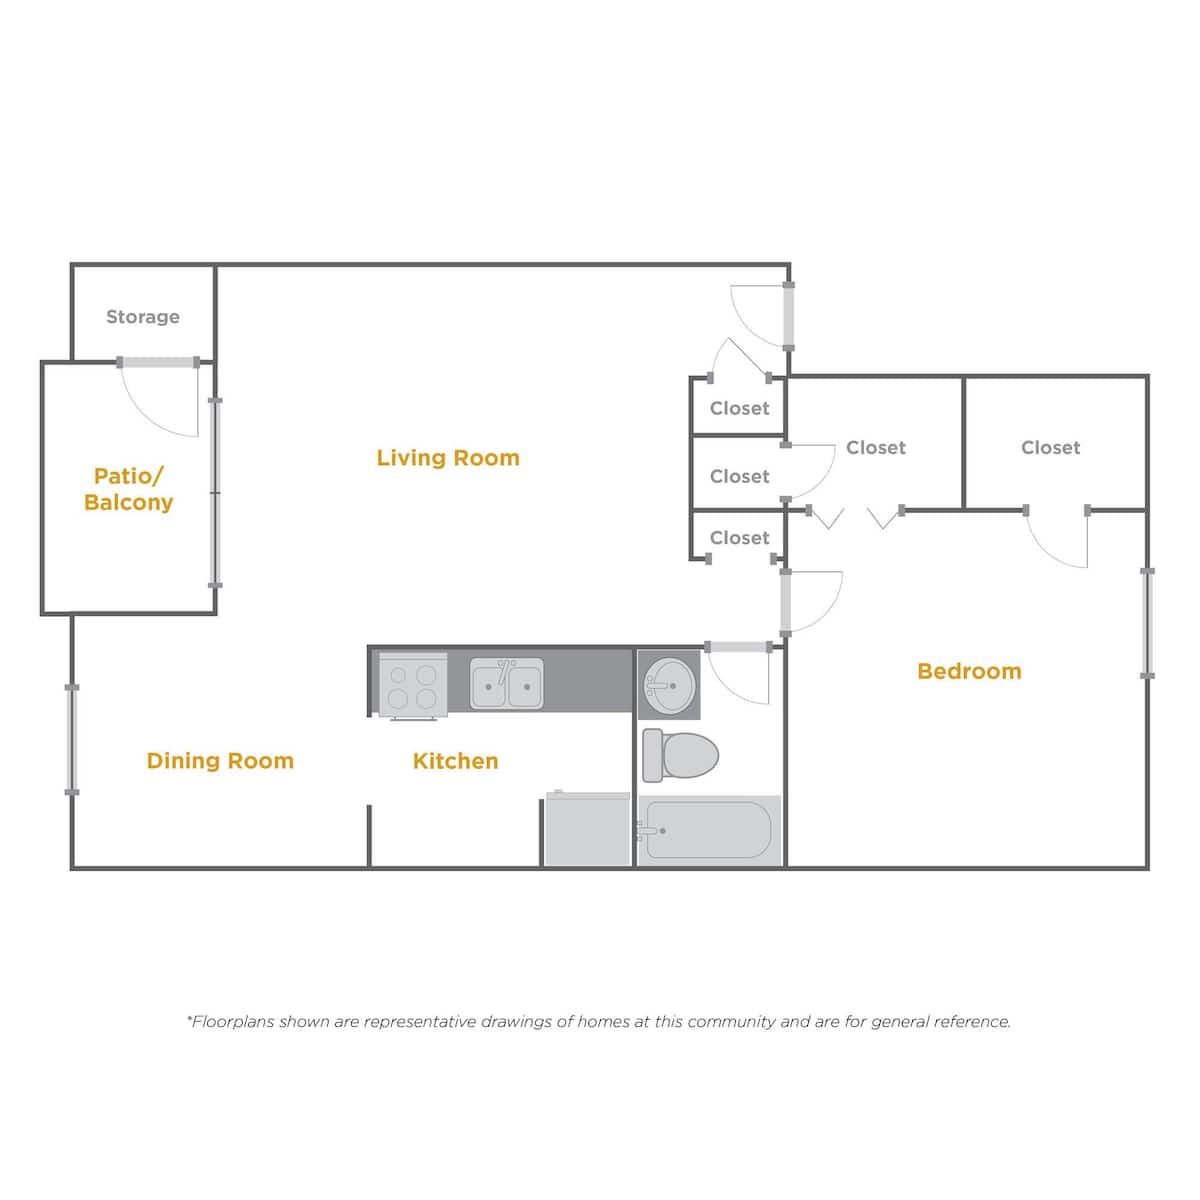 Floorplan diagram for a3, showing 1 bedroom